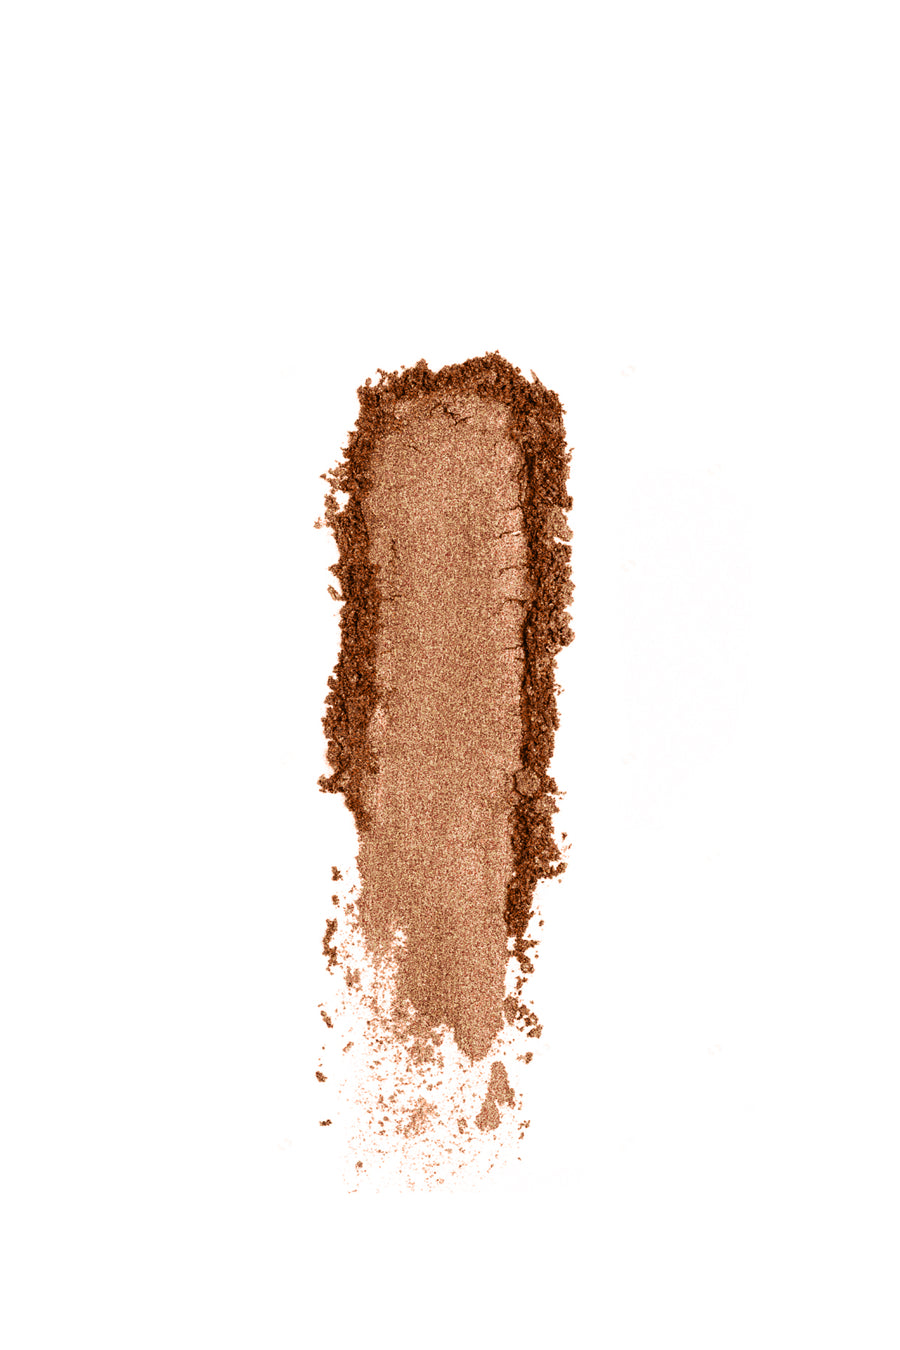 Shimmer Eyeshadow #11 - Bronze - Blend Mineral Cosmetics